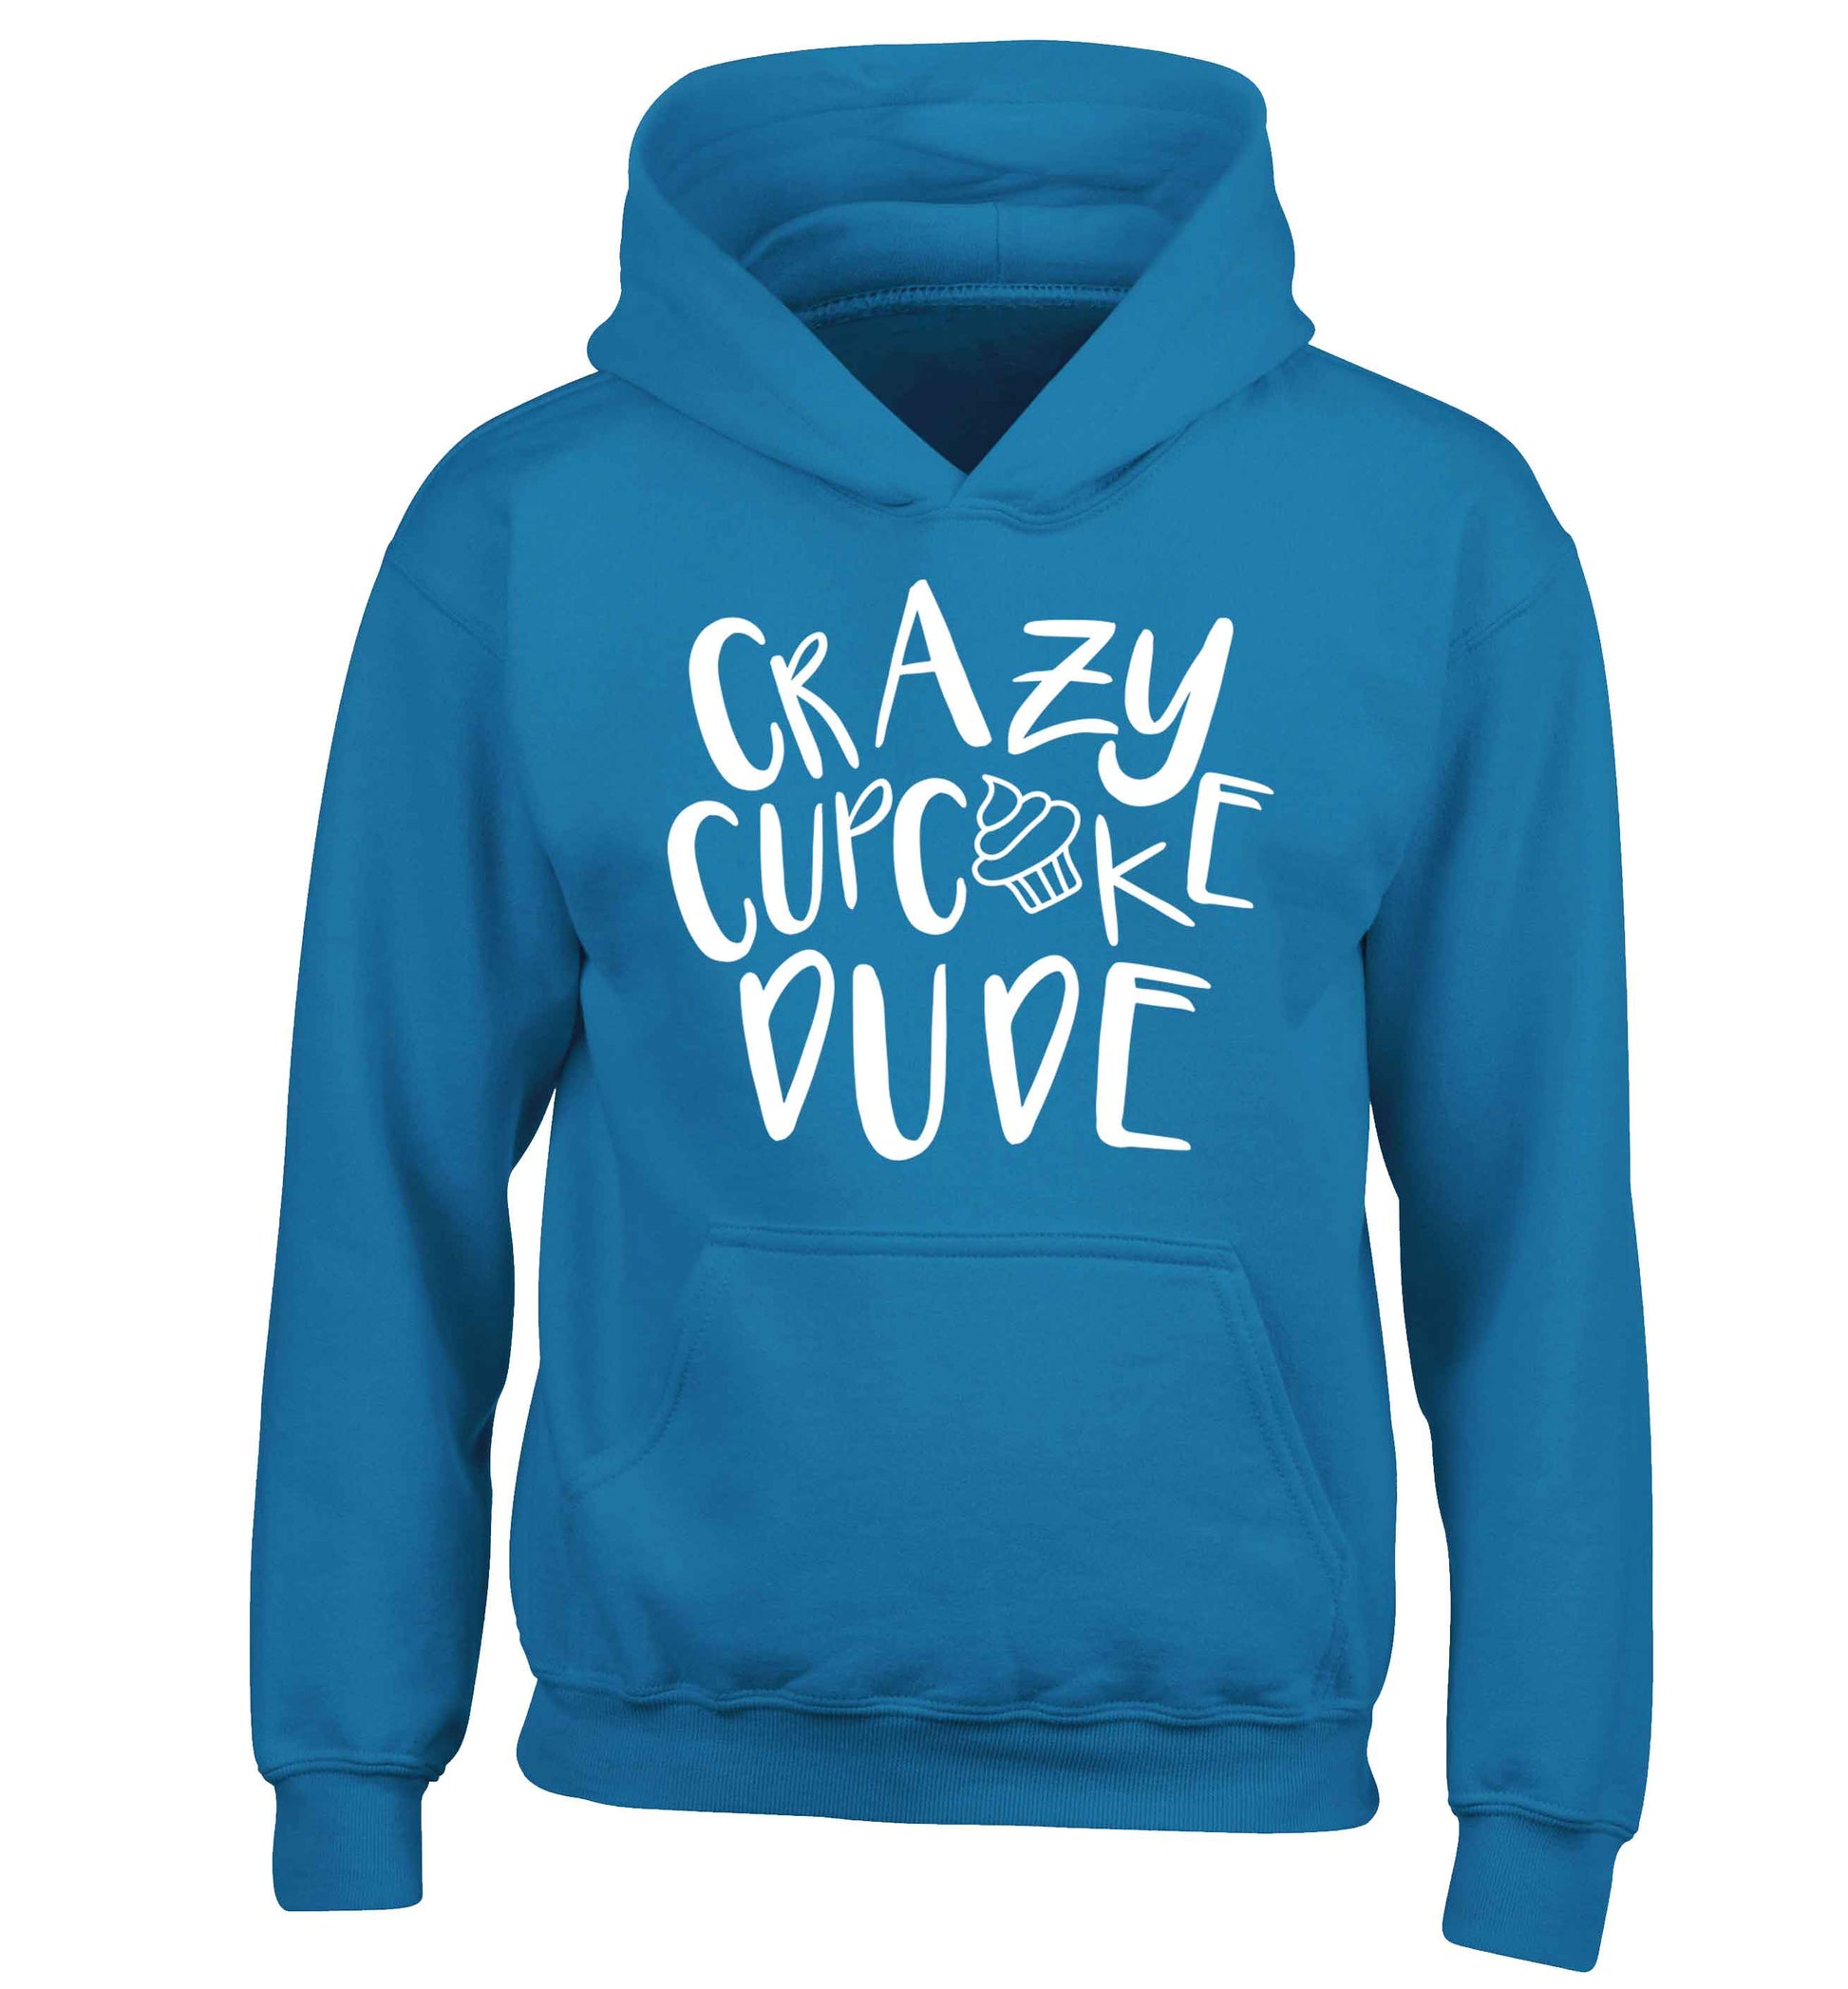 Crazy cupcake dude children's blue hoodie 12-13 Years